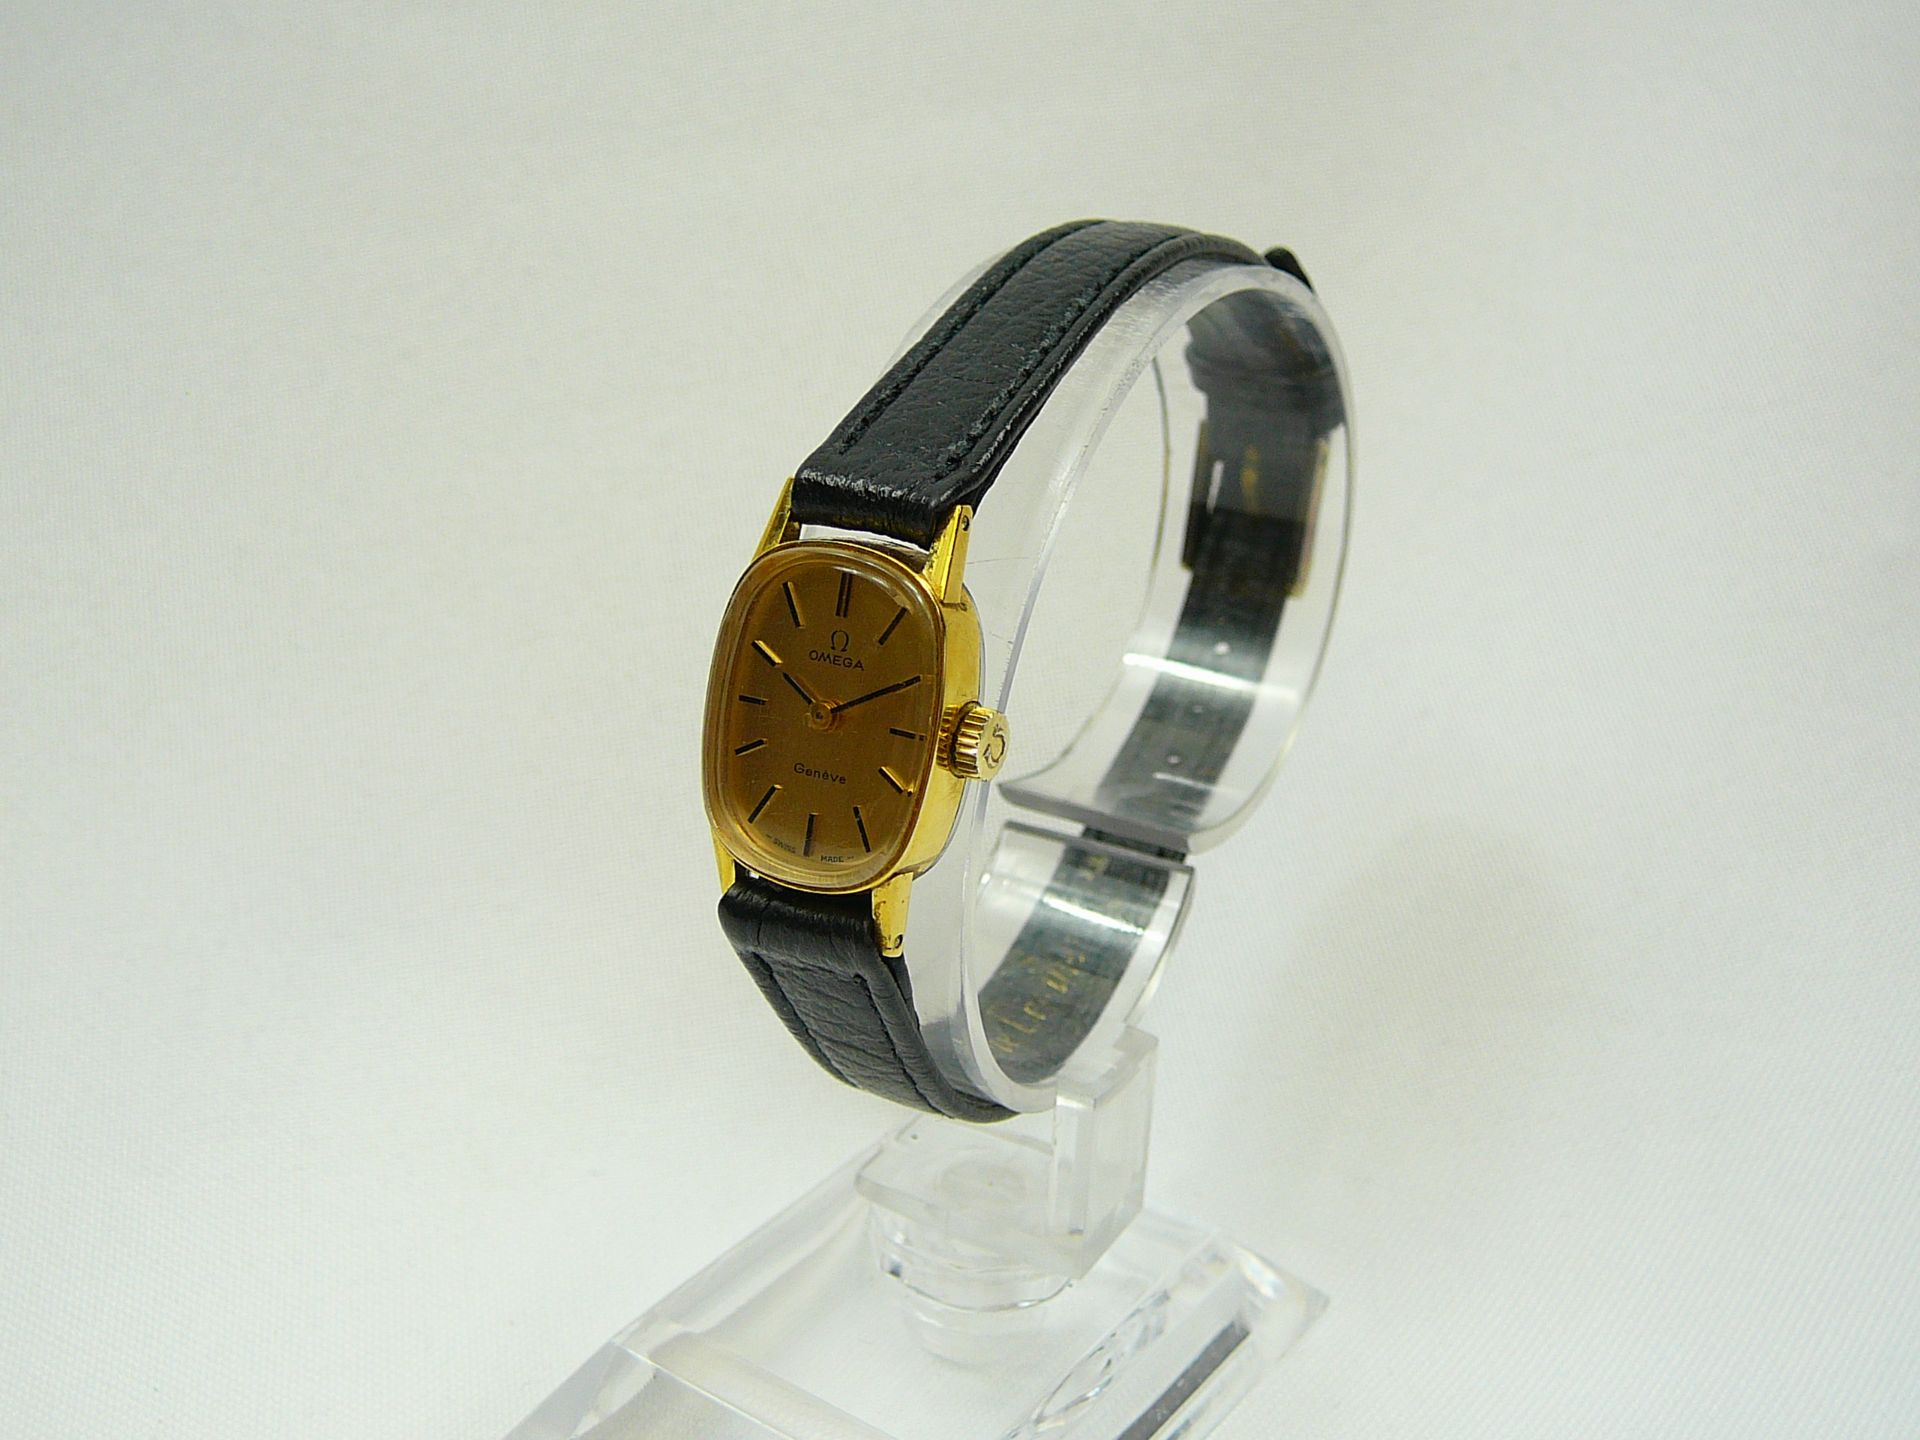 Ladies Vintage Omega Wrist Watch - Image 2 of 3